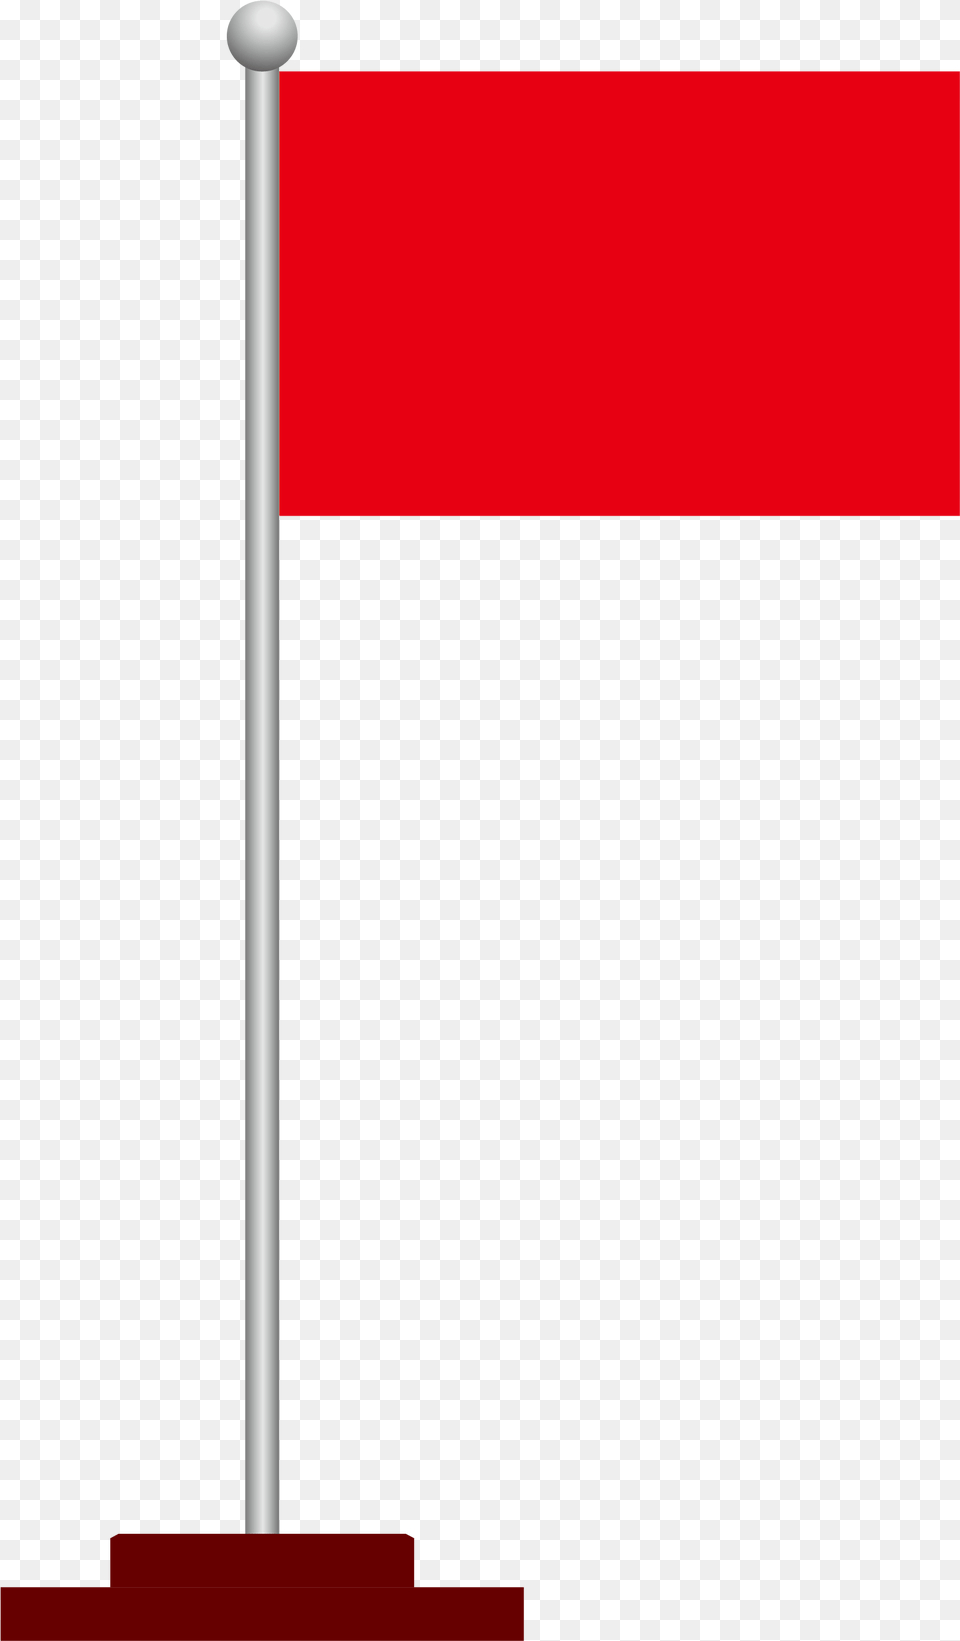 Flagpole Computer File Flag Pole Background Free Transparent Png